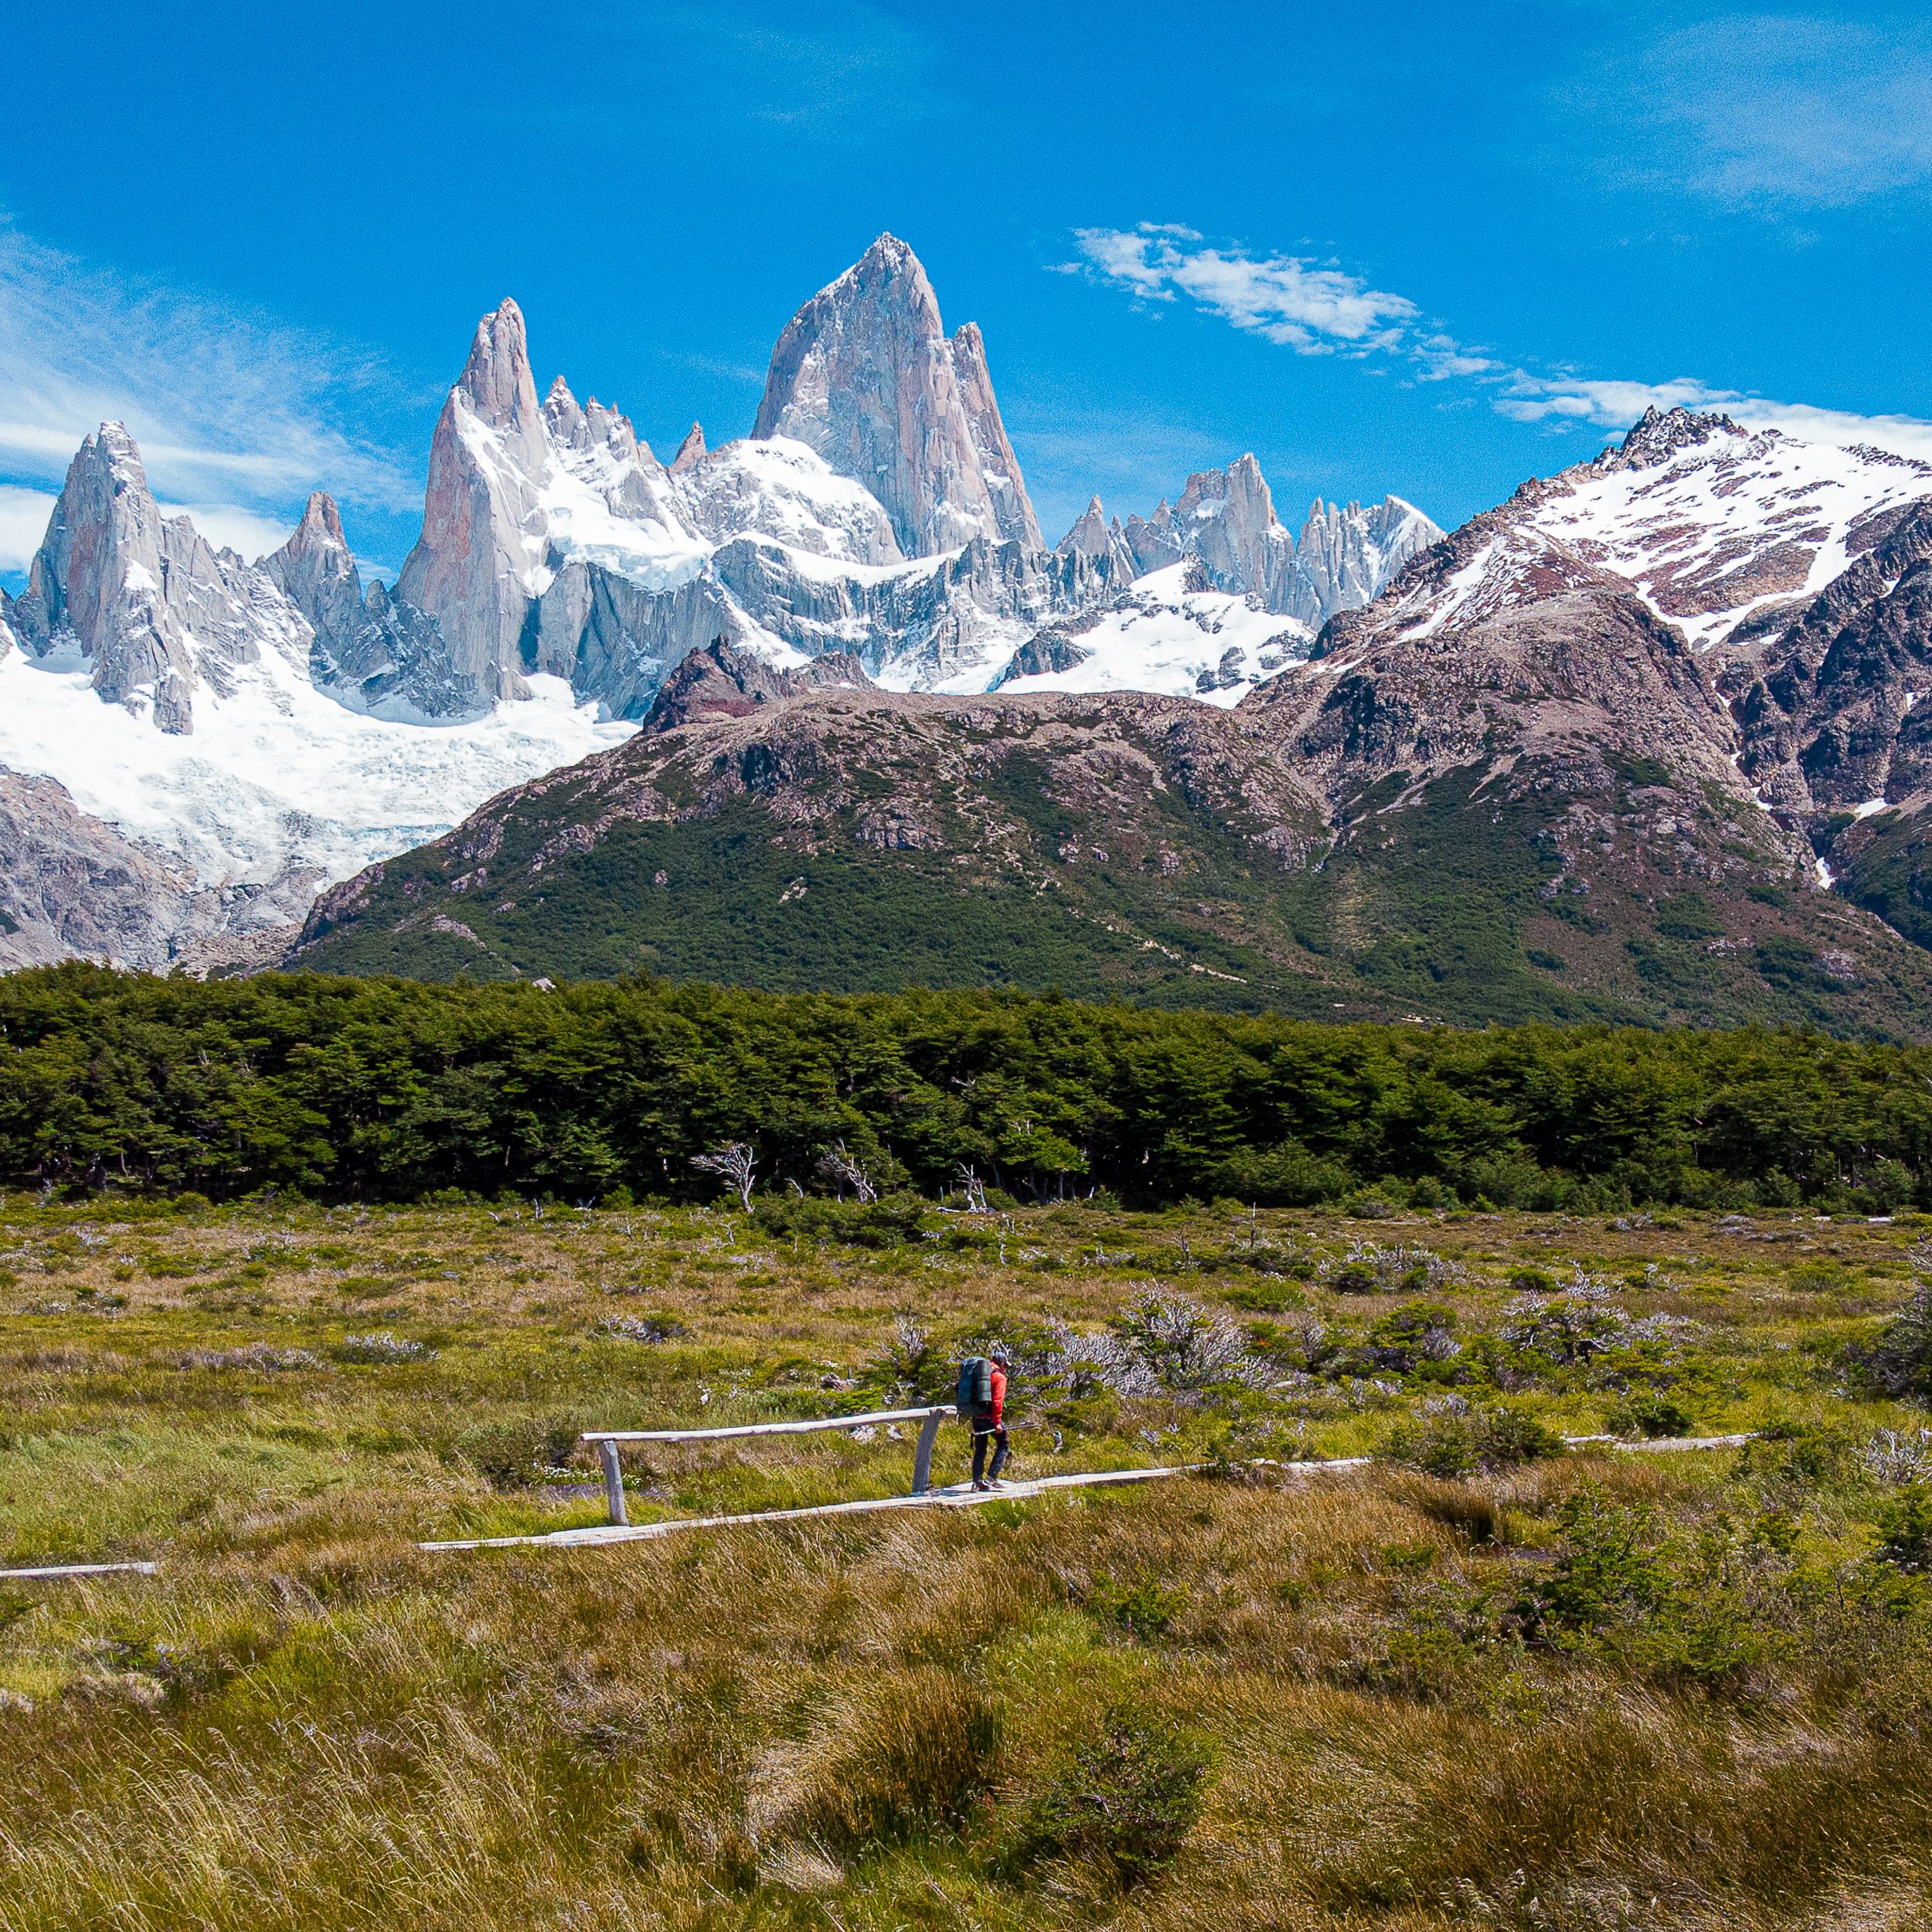 Der Berg Fitz Roy in El Chaltén, Patagonien. Argentinien.